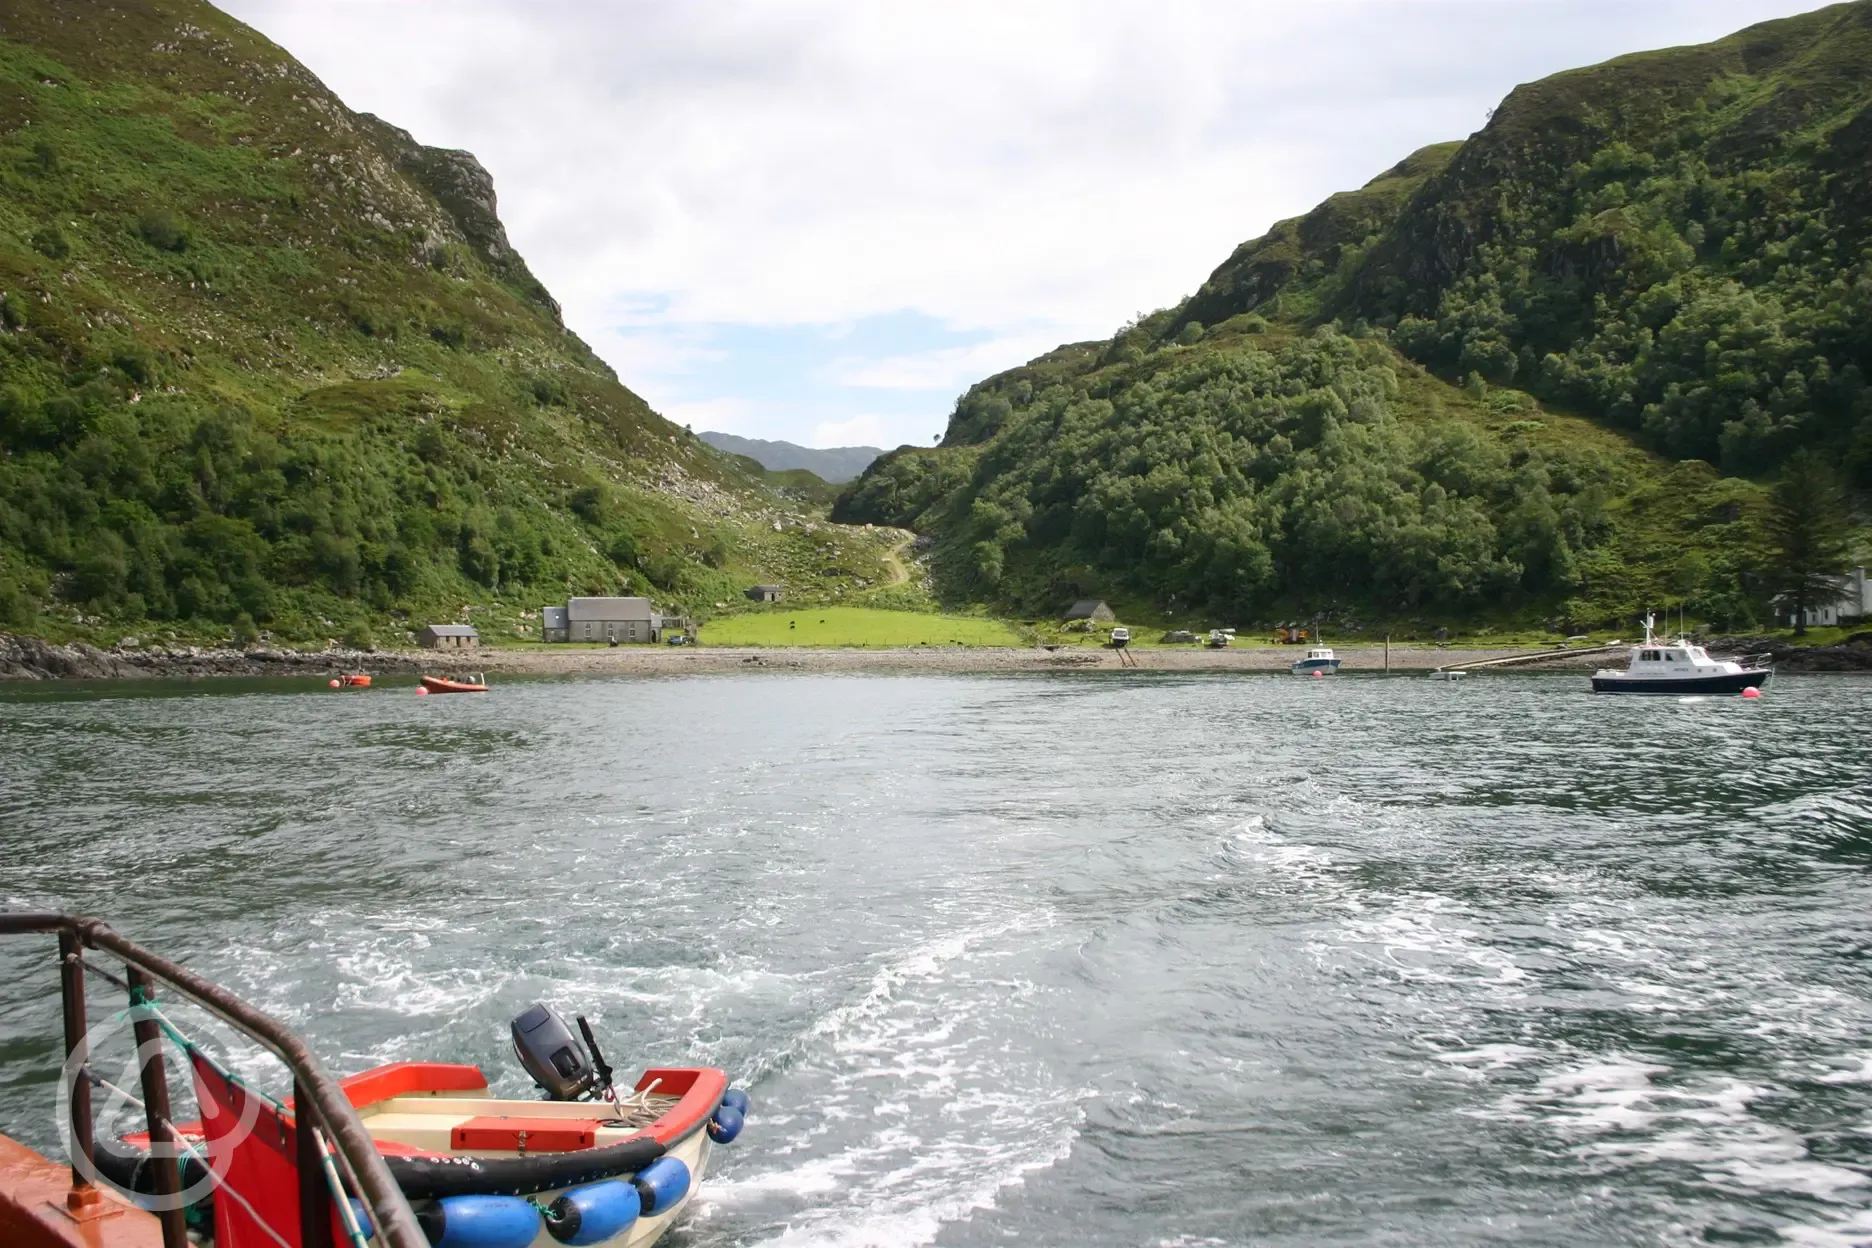 Take a boat trip from Arisaig, Mallaig or Loch Shiel 